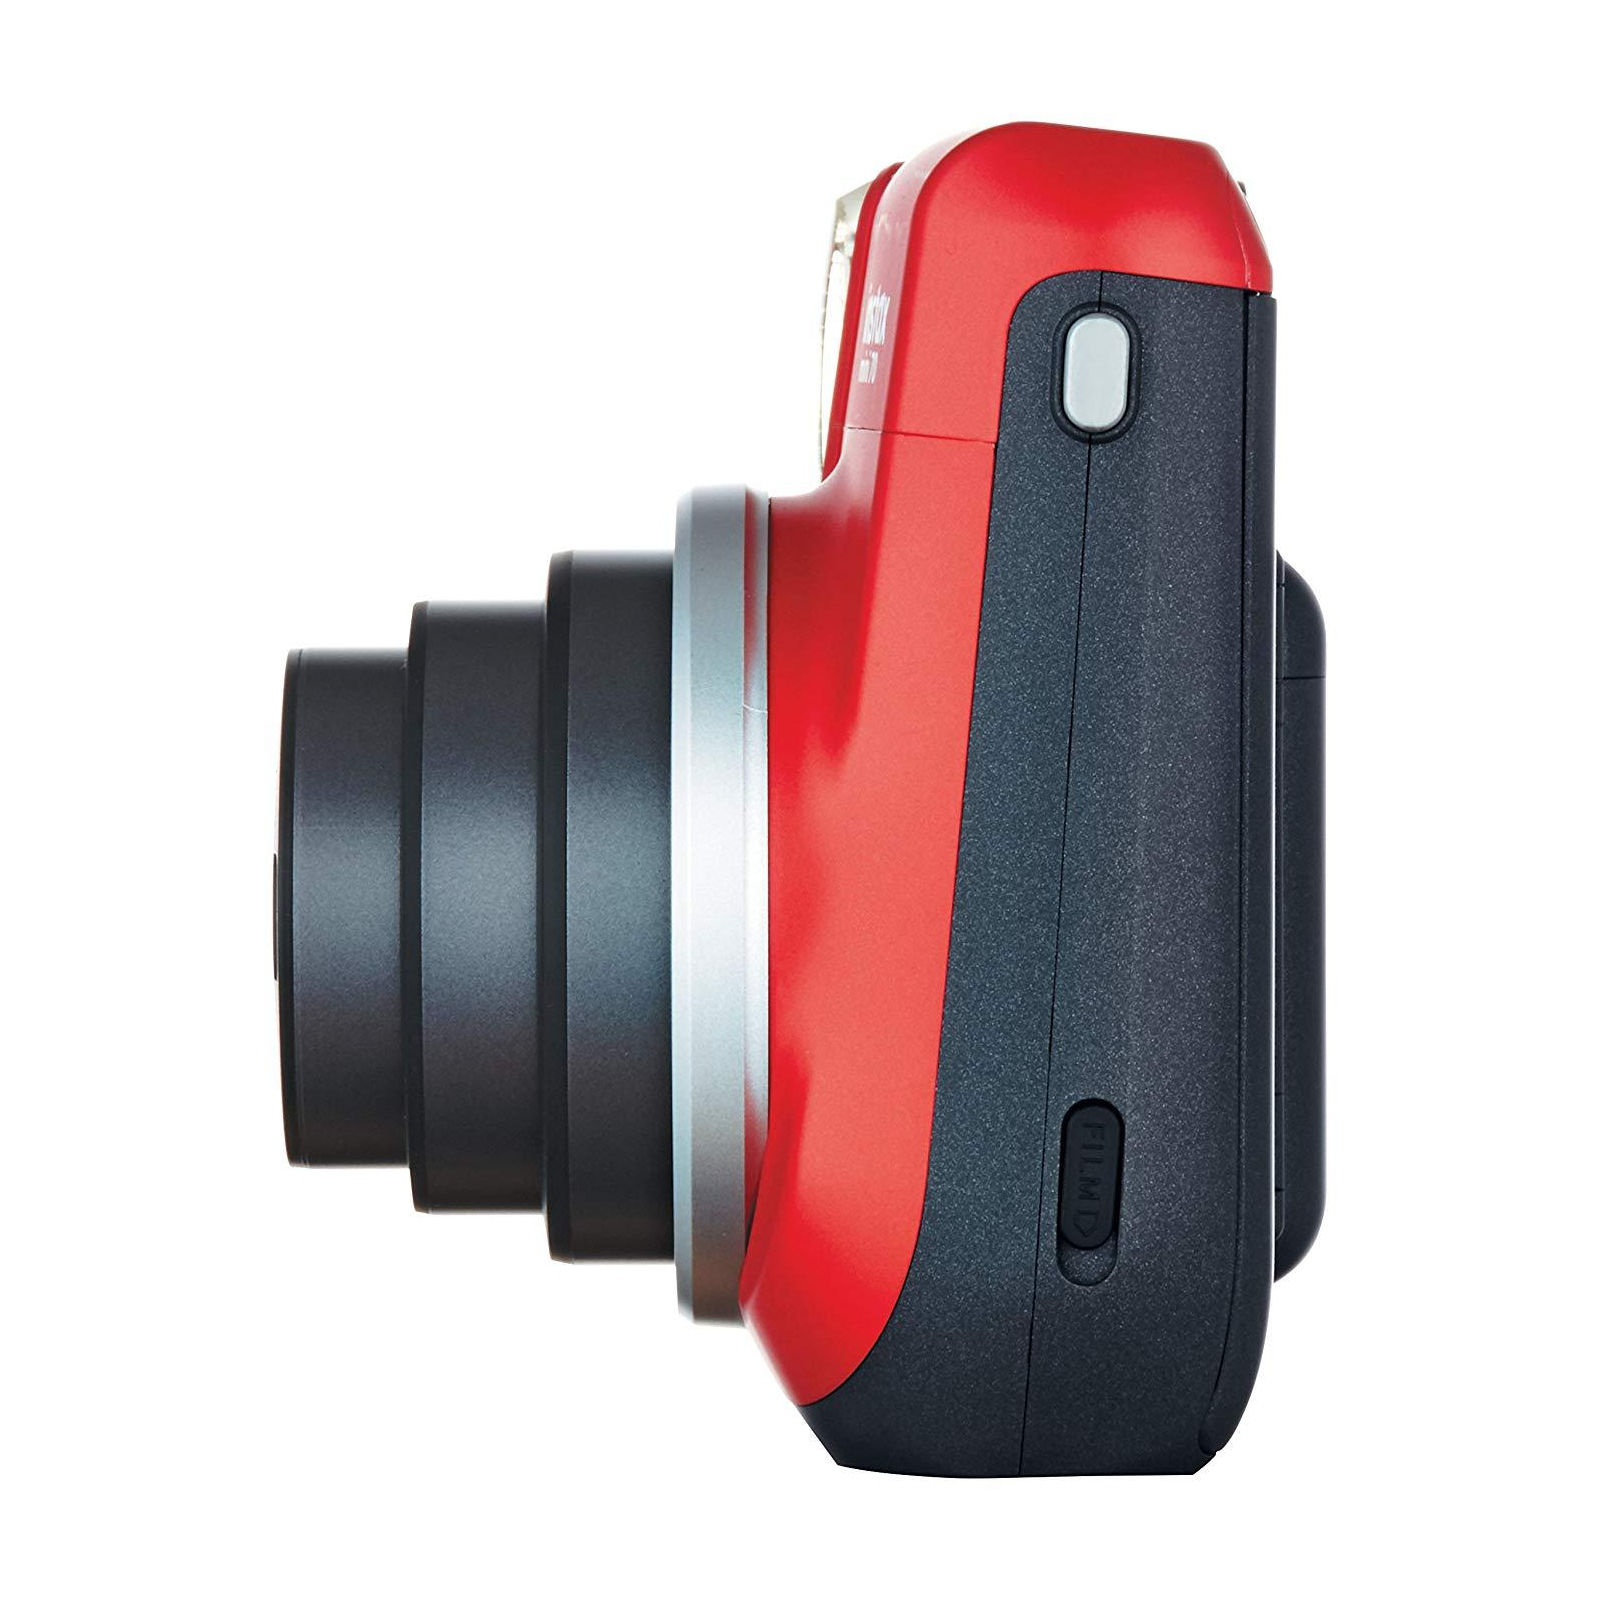 Камера моментальной печати Fujifilm Instax Mini 70 Passion Red (16513889) изображение 4